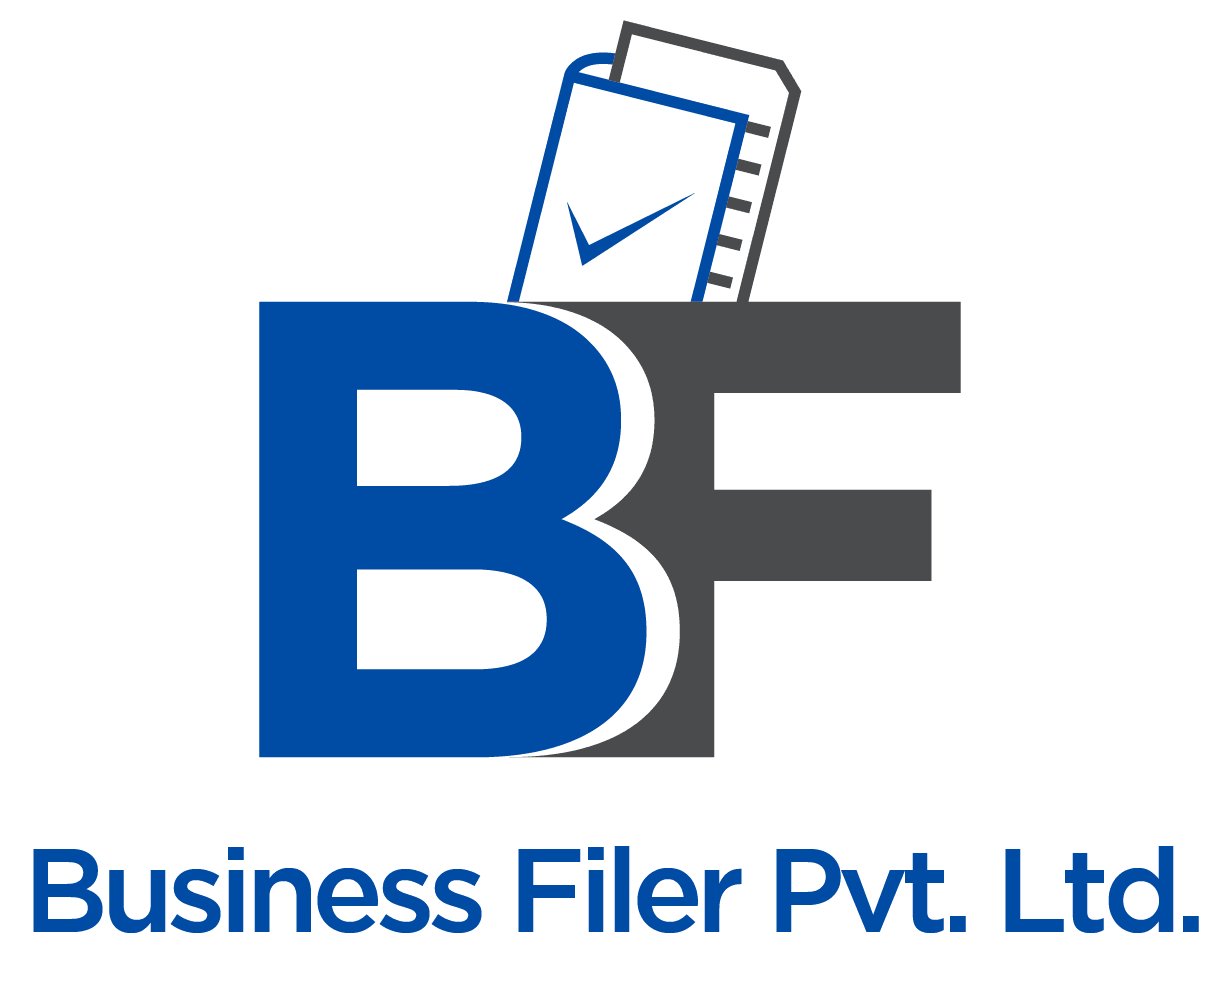 Business Filer Logo sizes5-04 (1)